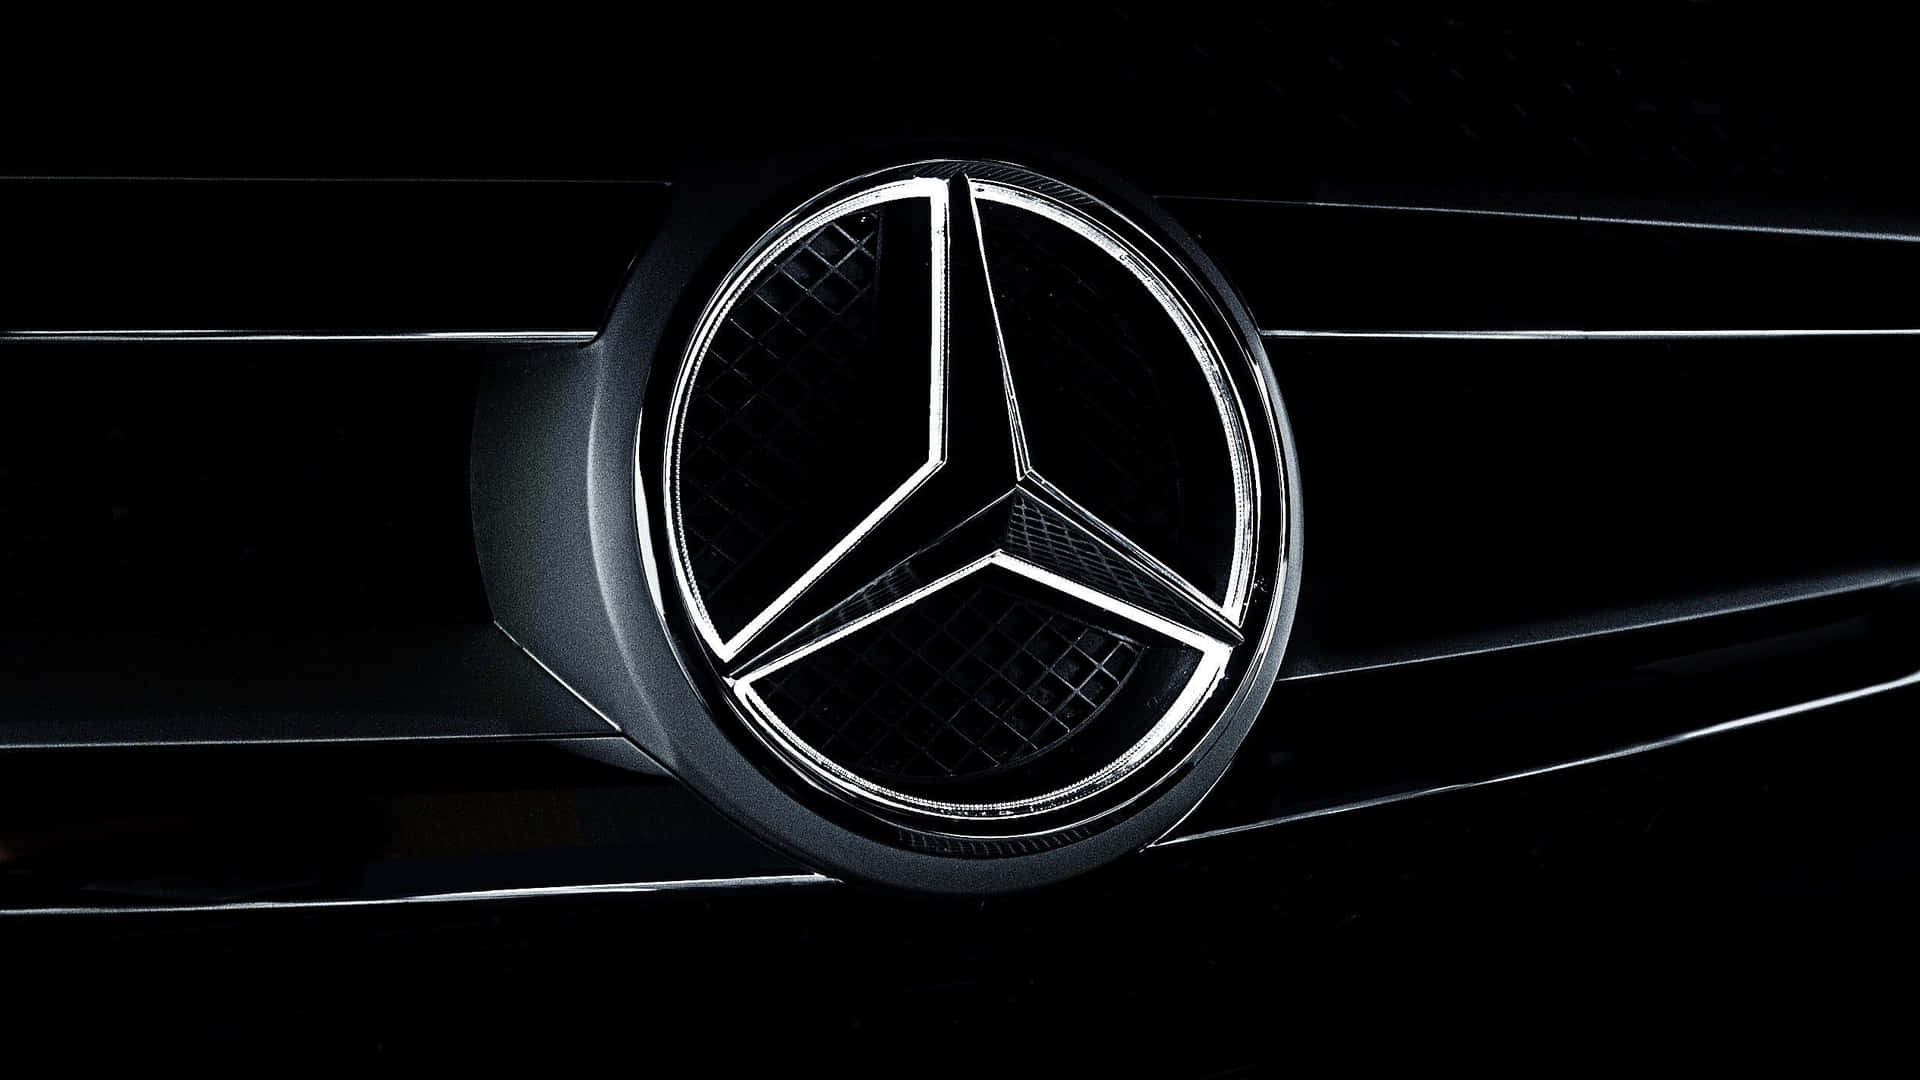 Mercedes Benz Logo On A Black Car Wallpaper